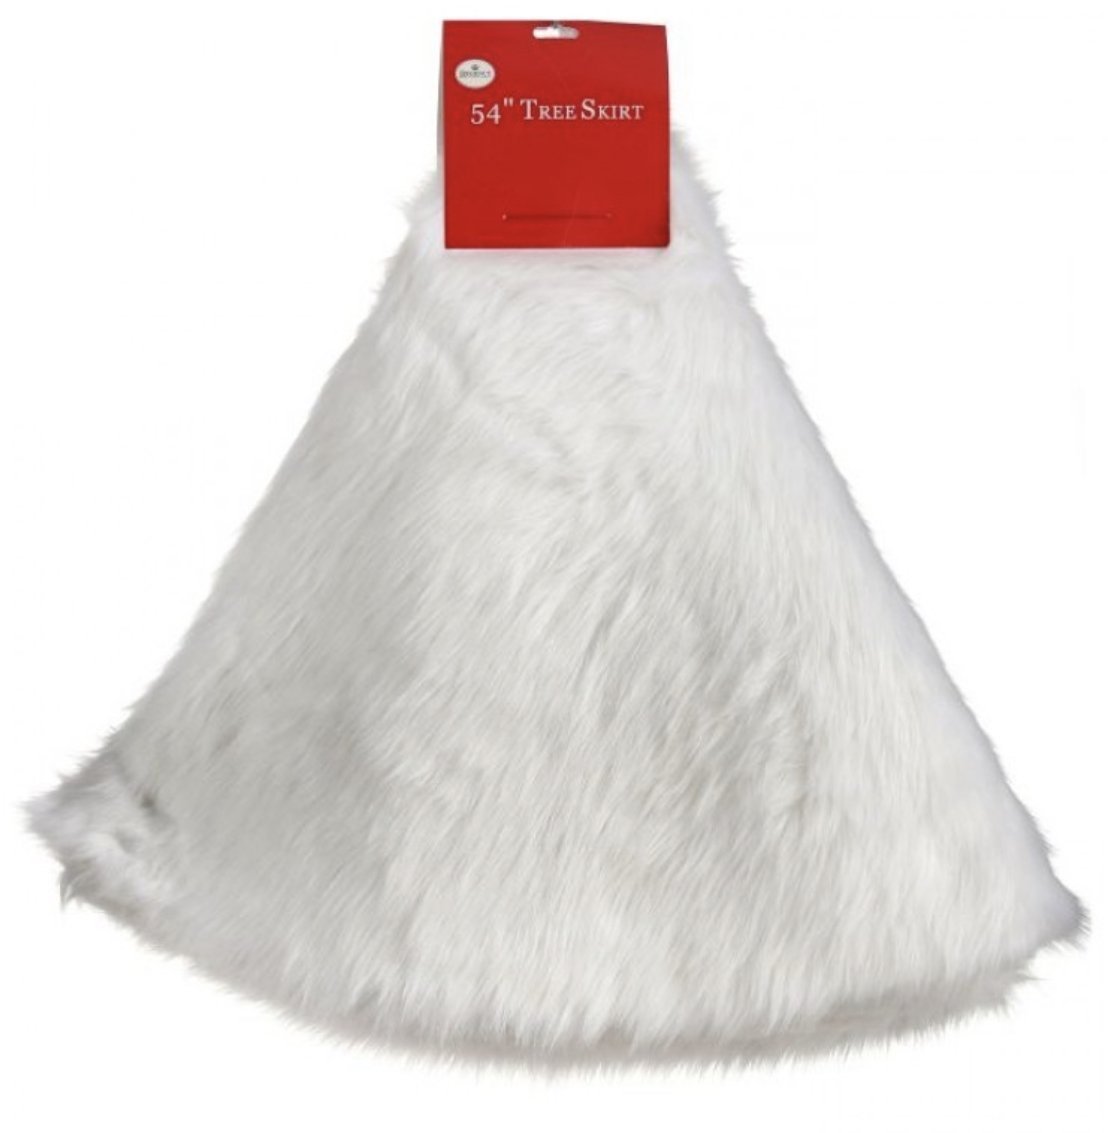 White fur Christmas tree skirt - 54” - Greenery Market Christmas